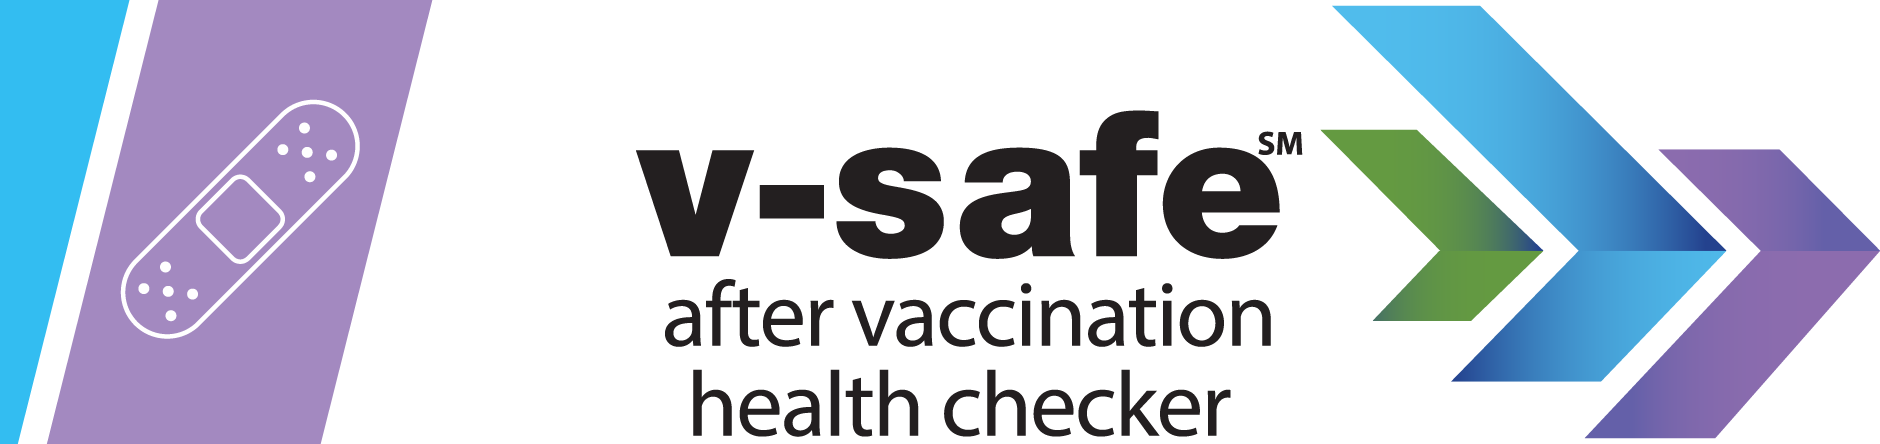 V safe. VSAFE. D Health Checker. URL for Health Checker.